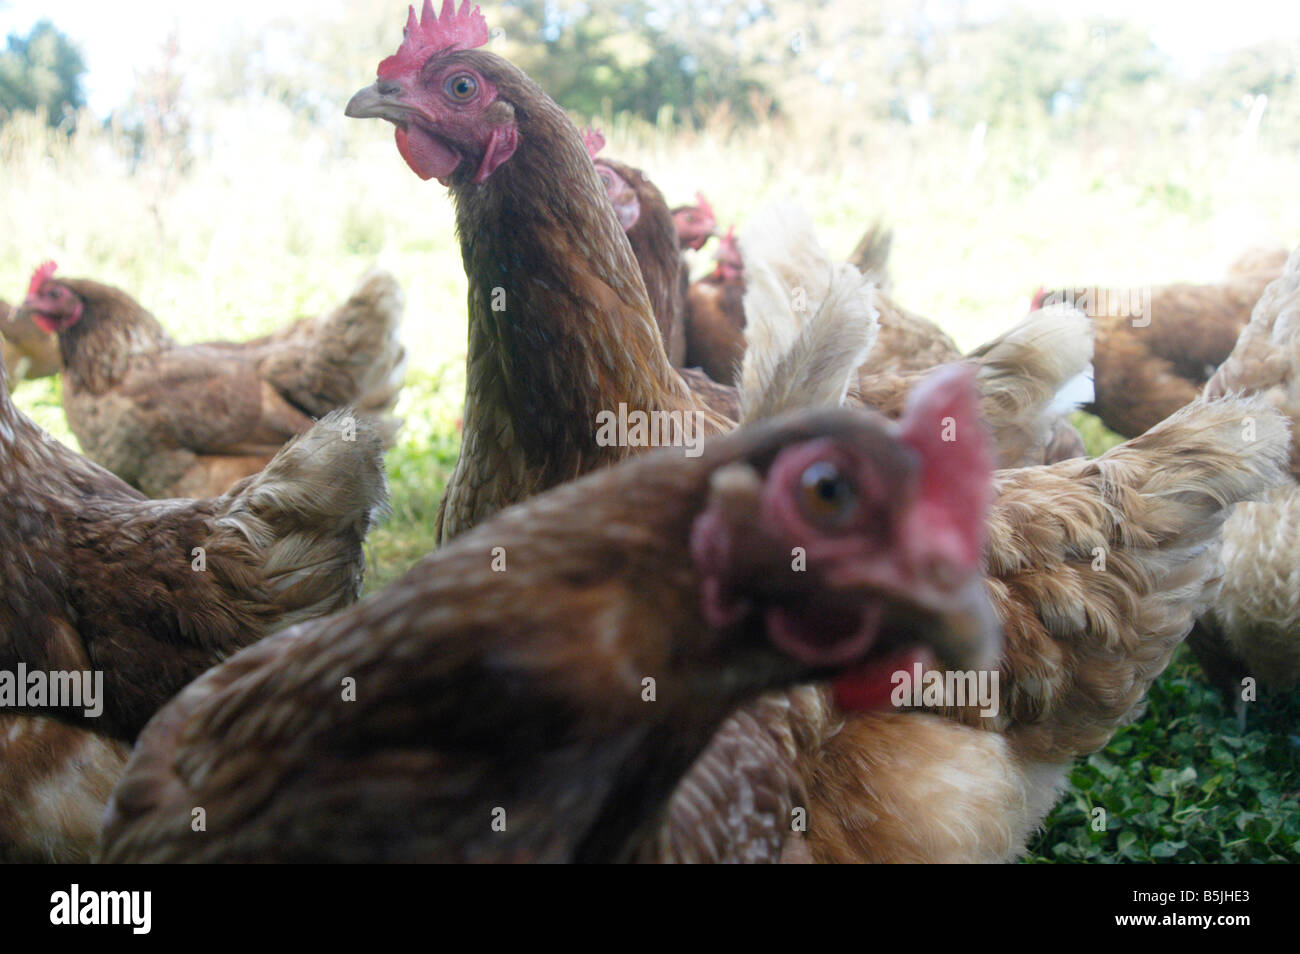 Hens on organic farm Stock Photo